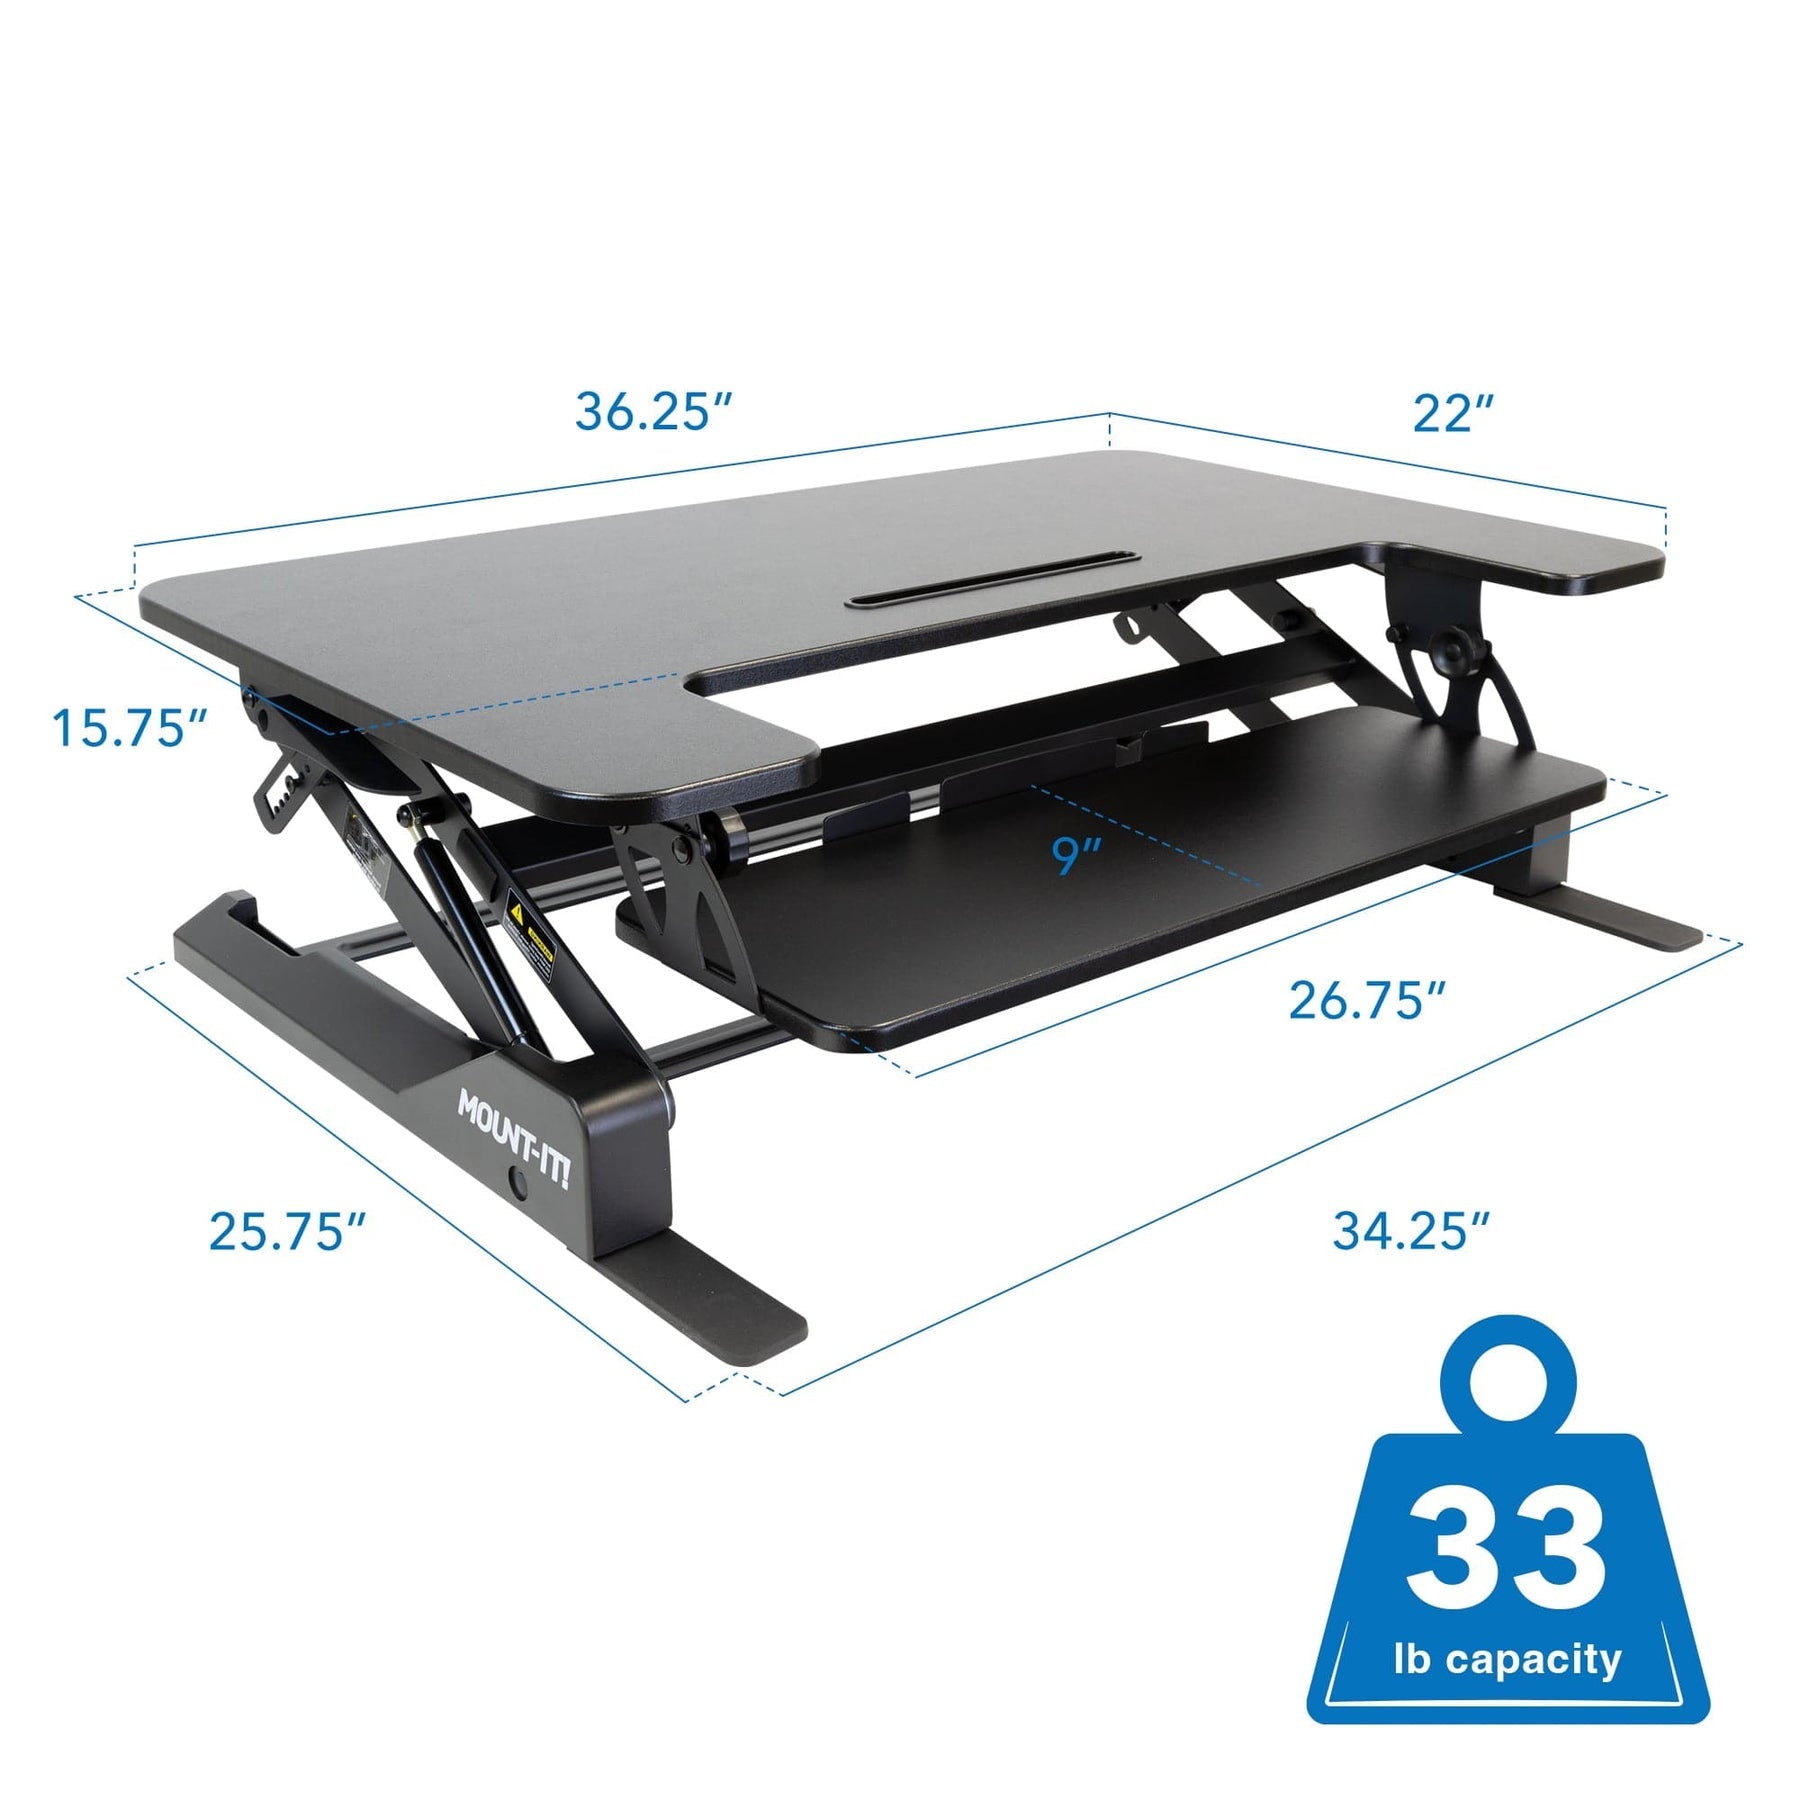 Size of Standing desk converter